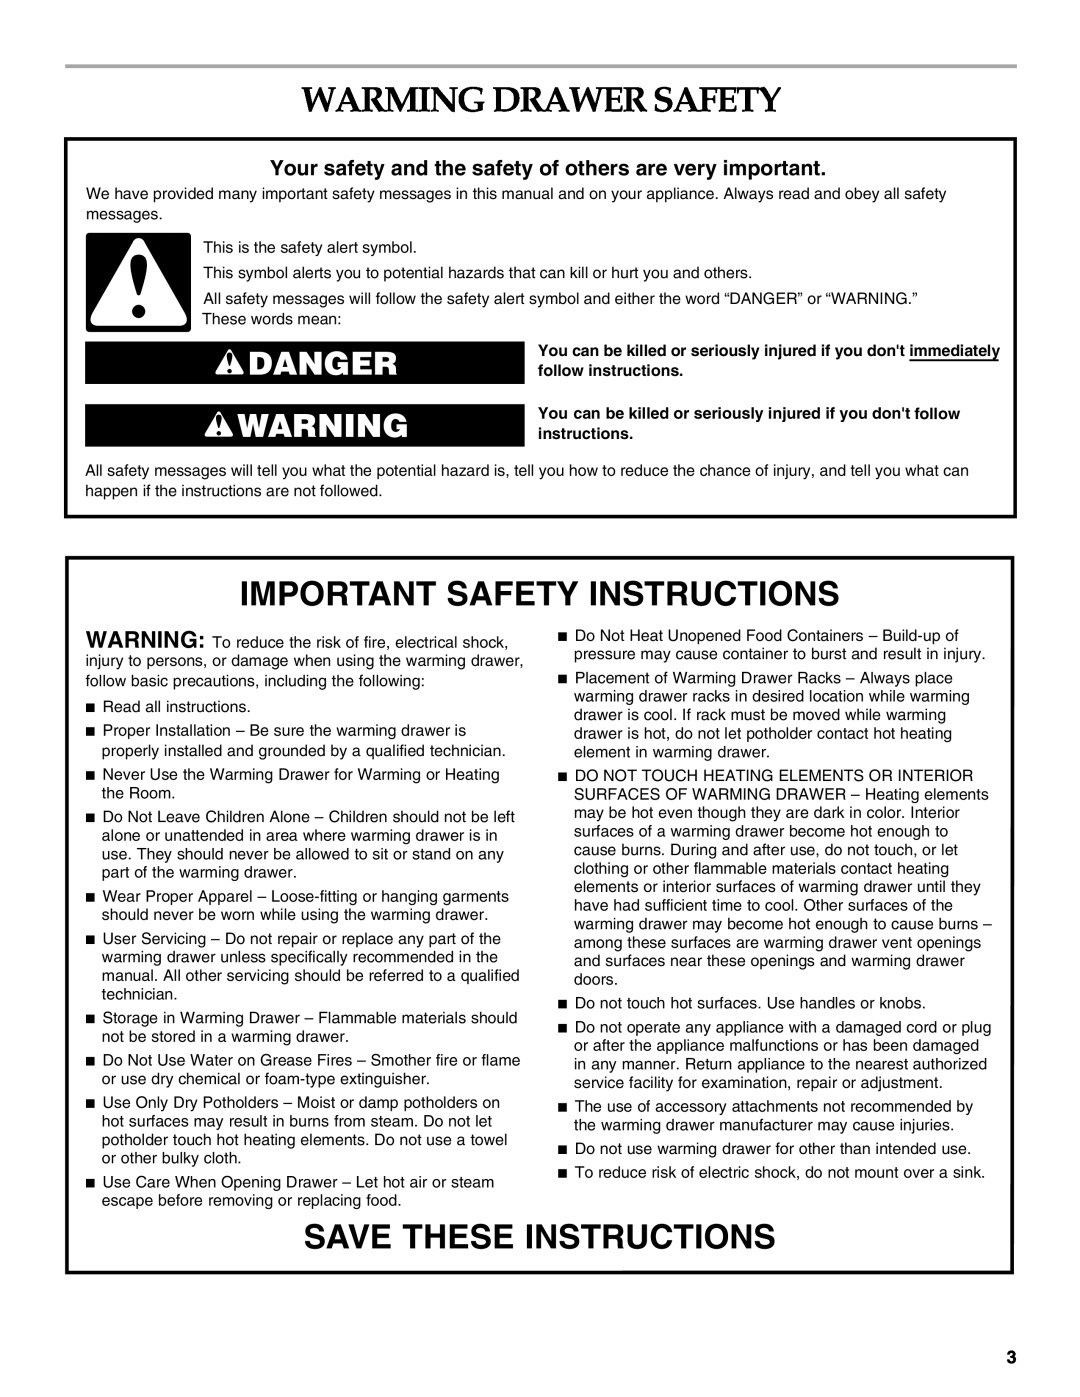 KitchenAid KEWS105, KEWS175, KEWS145 Warming Drawer Safety, Important Safety Instructions, Save These Instructions, Danger 